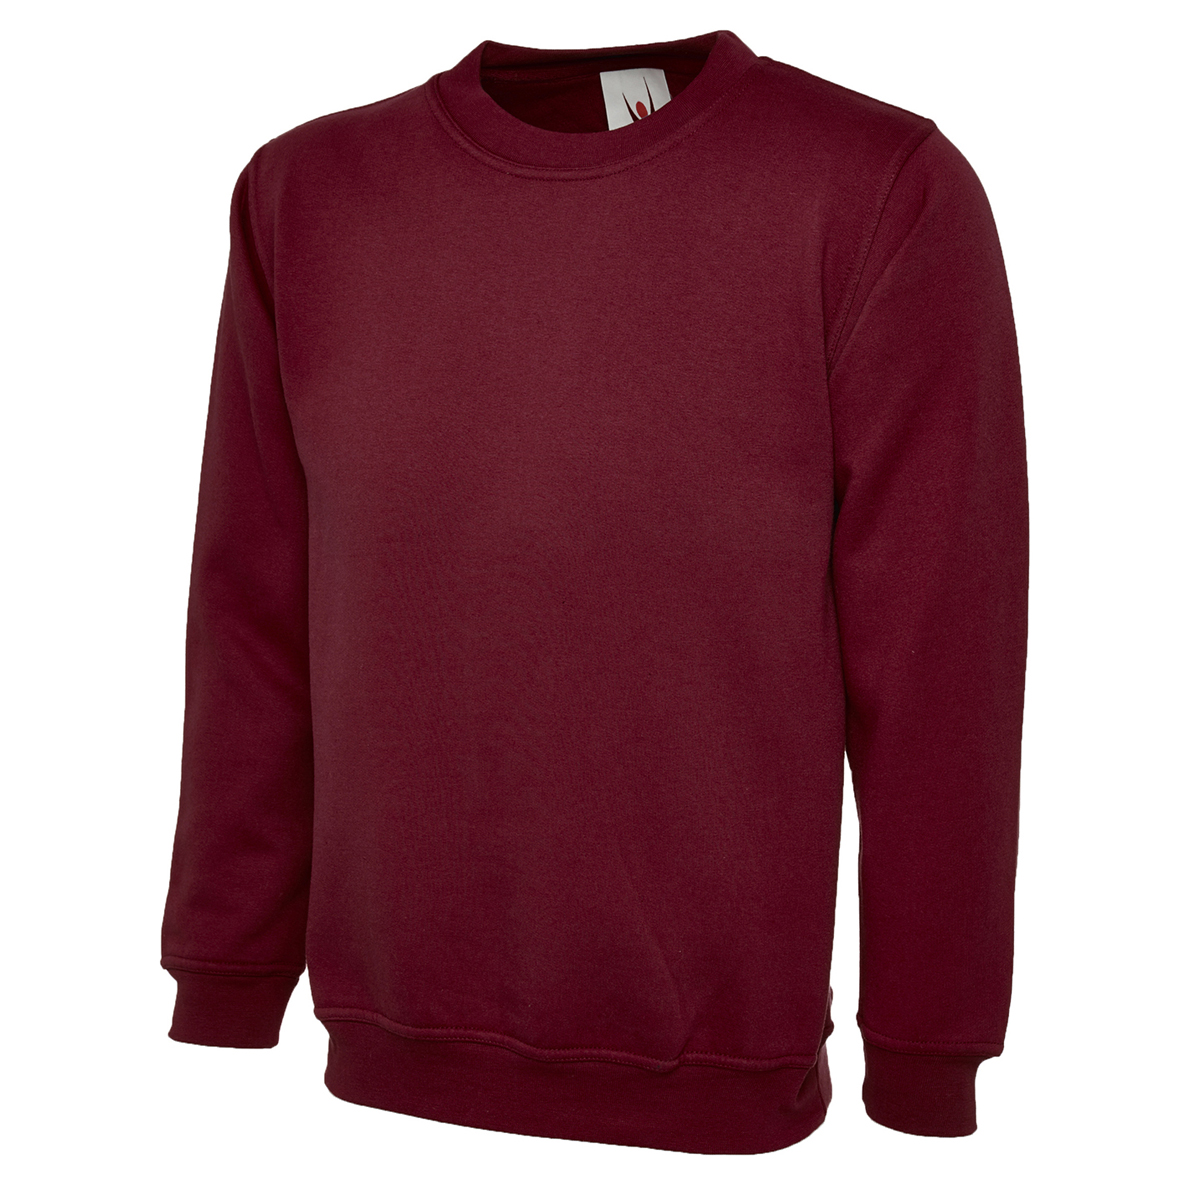 Uc203 300gsm classic sweatshirt - maroon - large